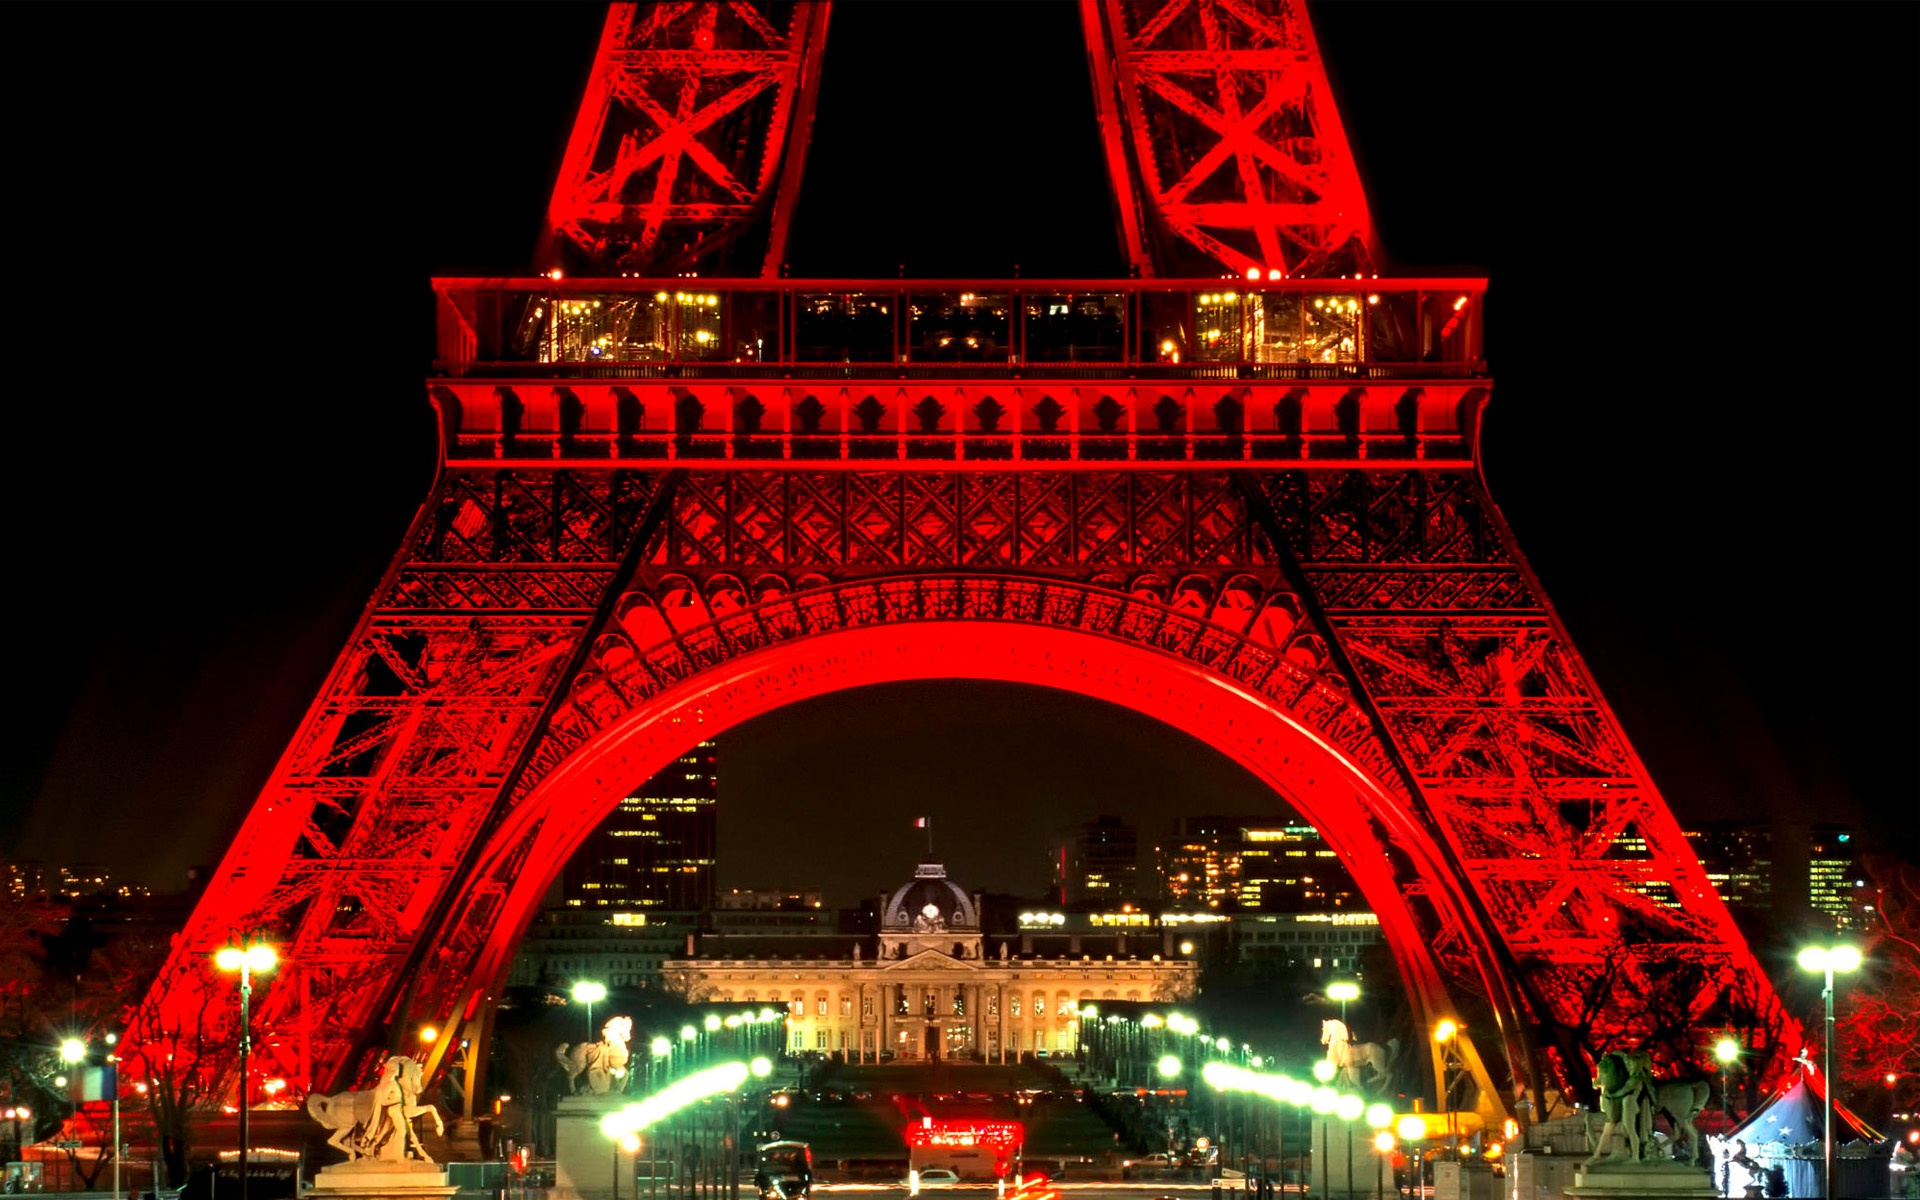 Eiffel Tower At Night - Paris Christmas Eiffel Tower - 1920x1200 Wallpaper  